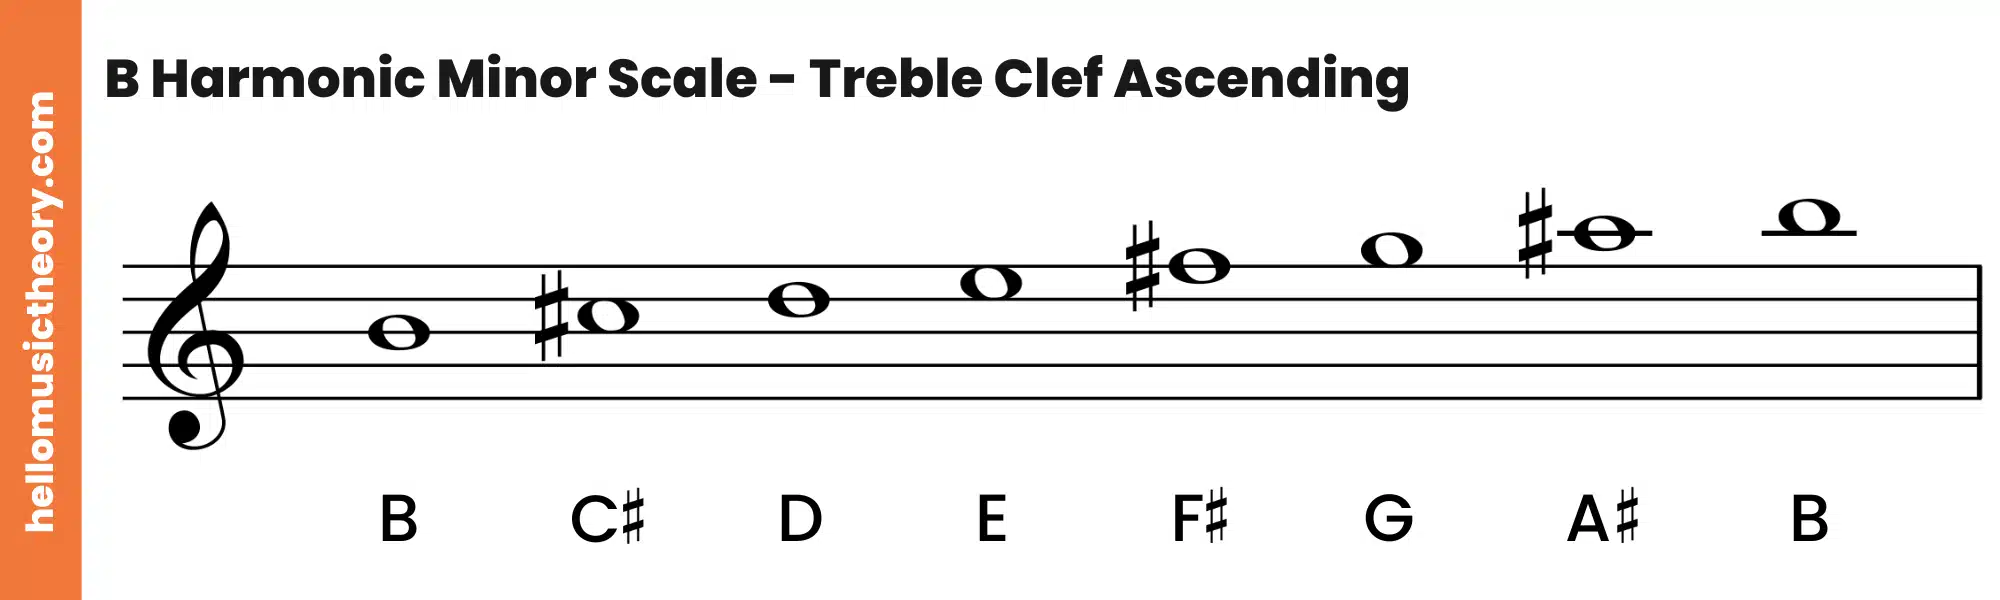 B Harmonic Minor Scale Treble Clef Ascending